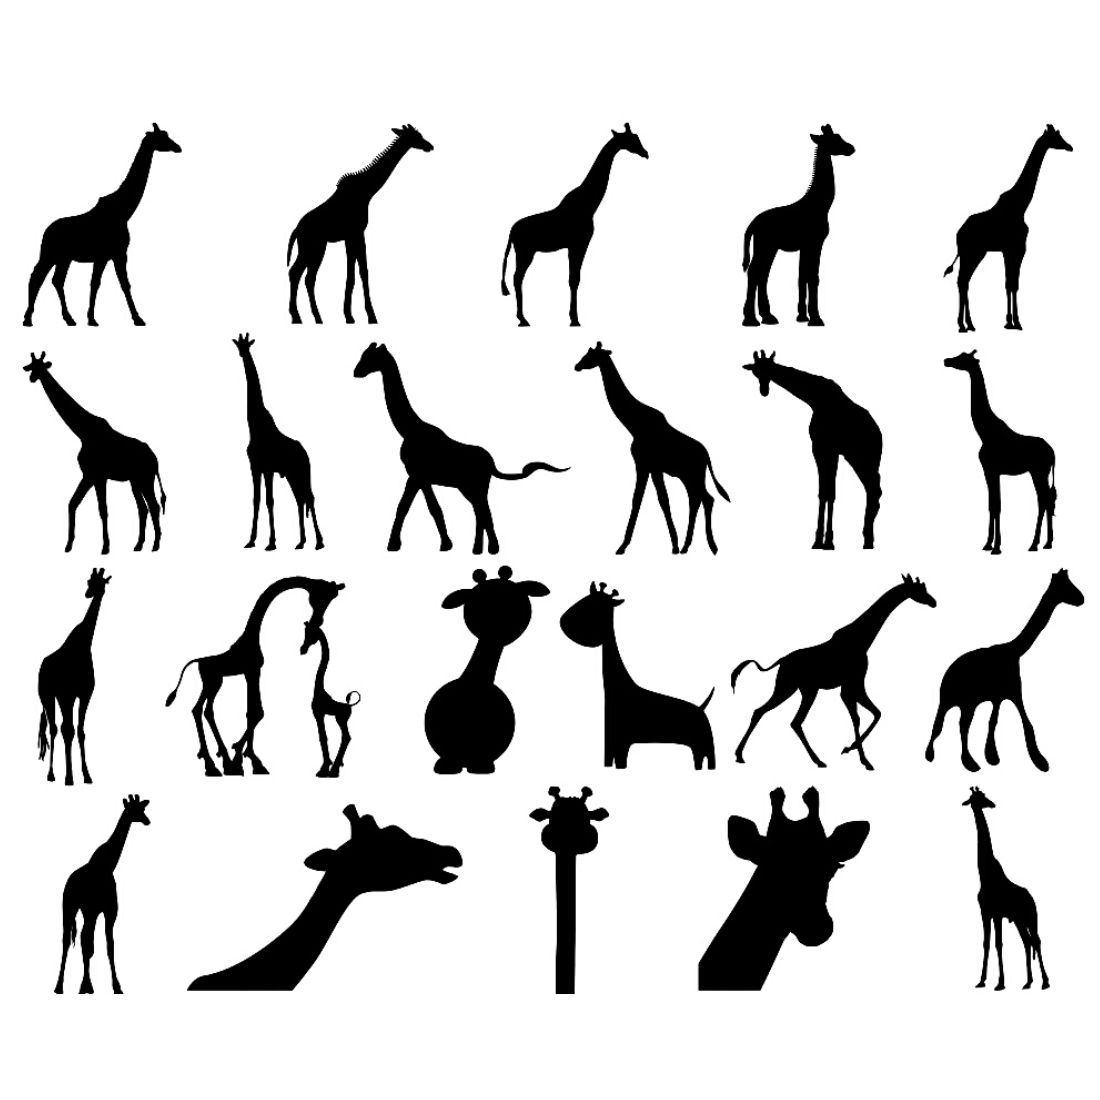 Giraffe Silhouette Bundles cover image.